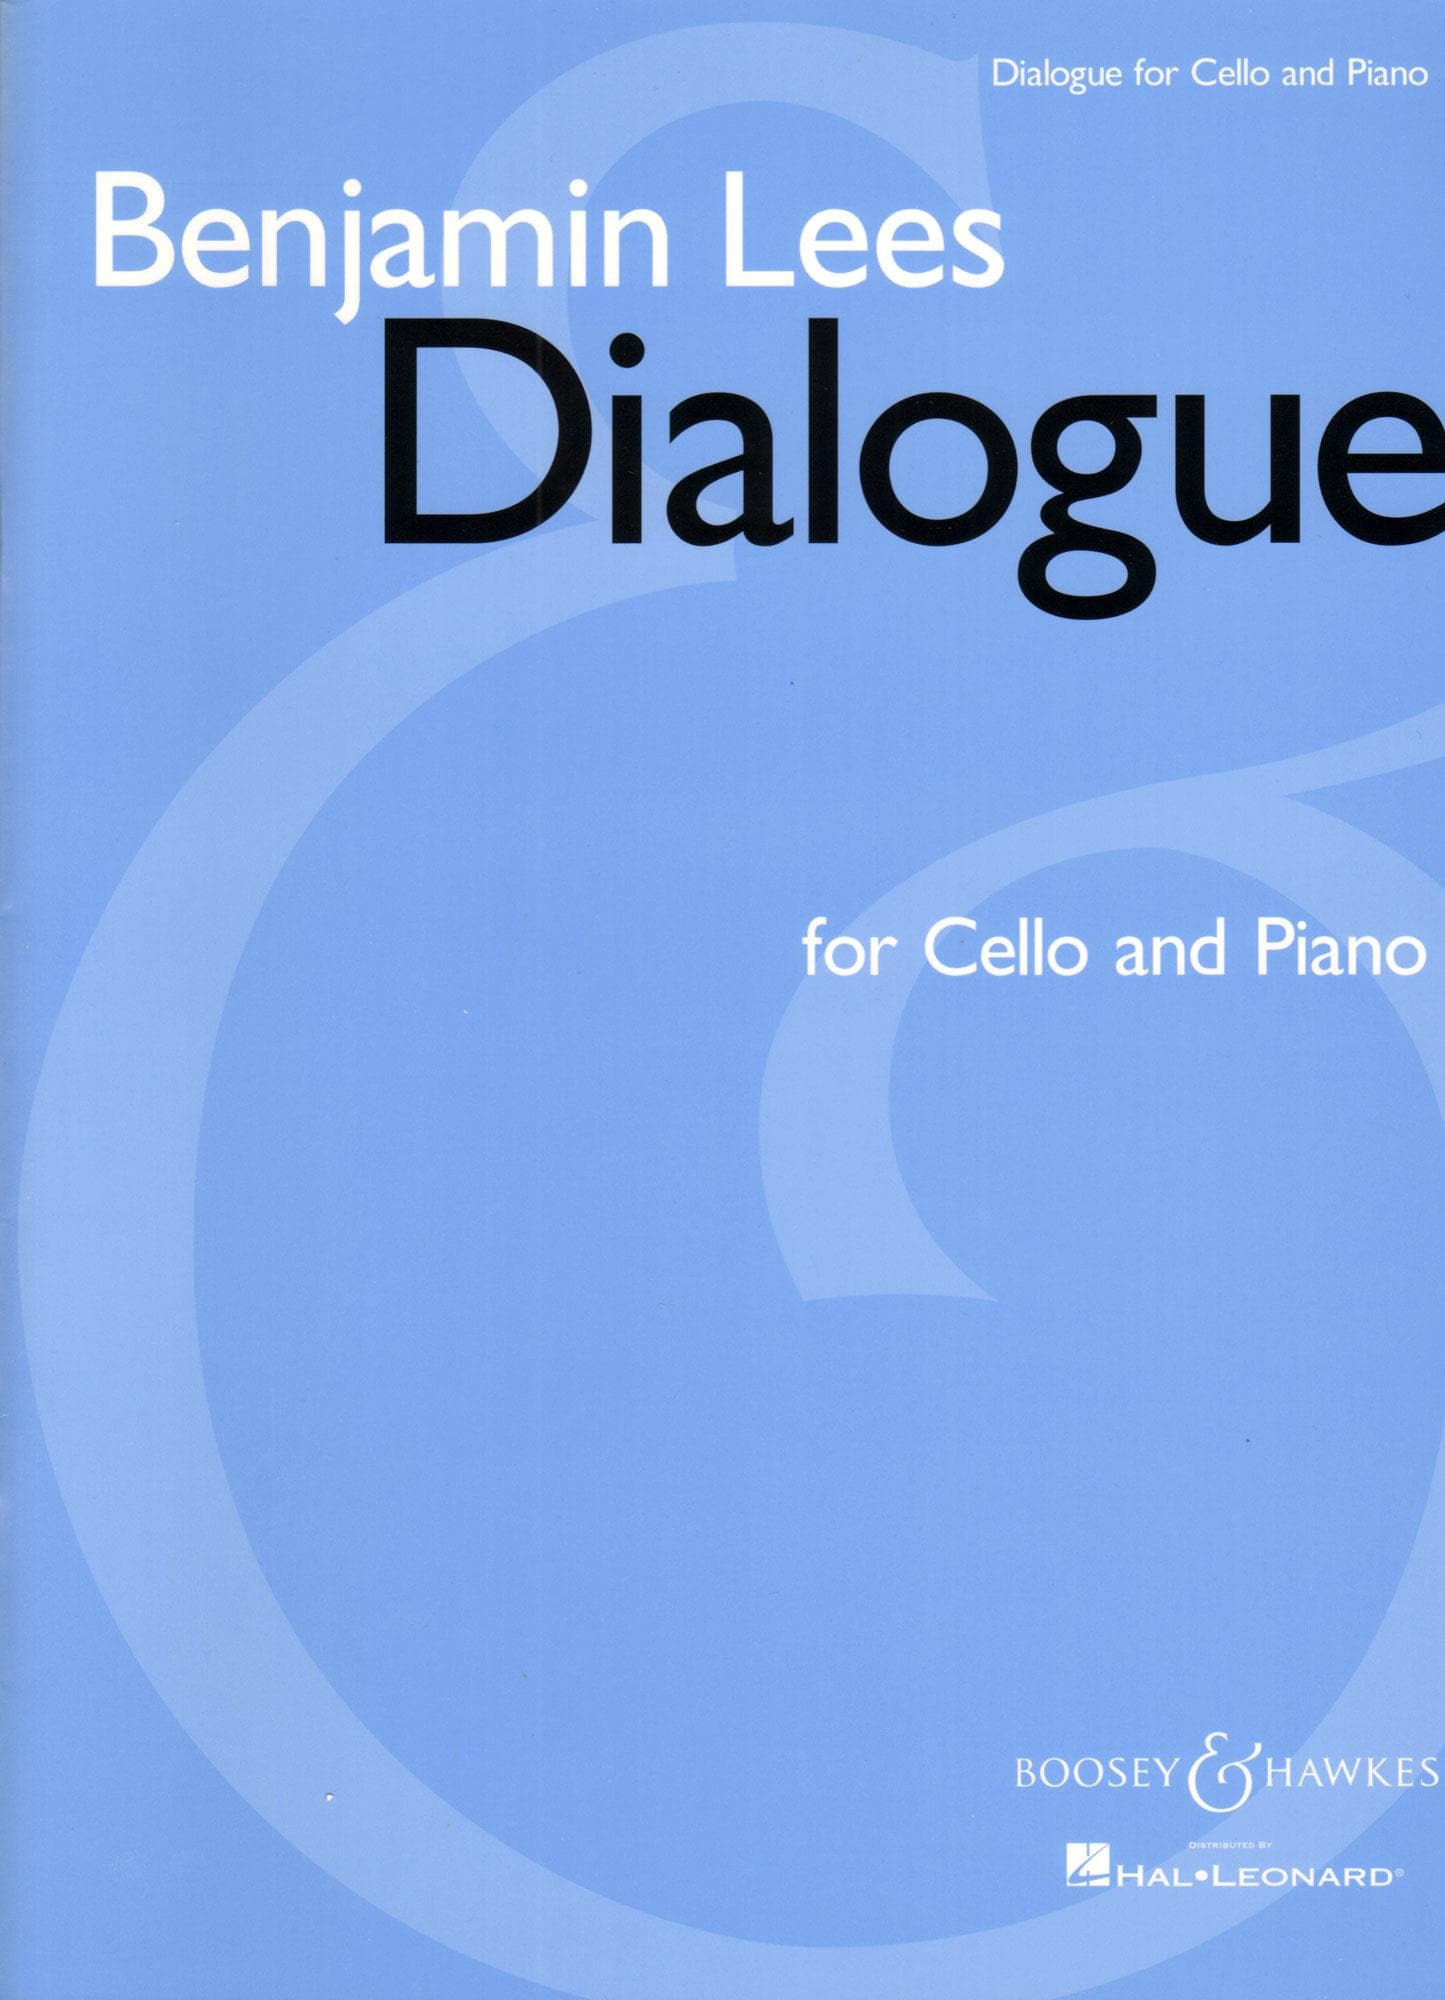 Lees, Benjamin - Dialogue for Cello and Piano - Boosey & Hawkes Edition